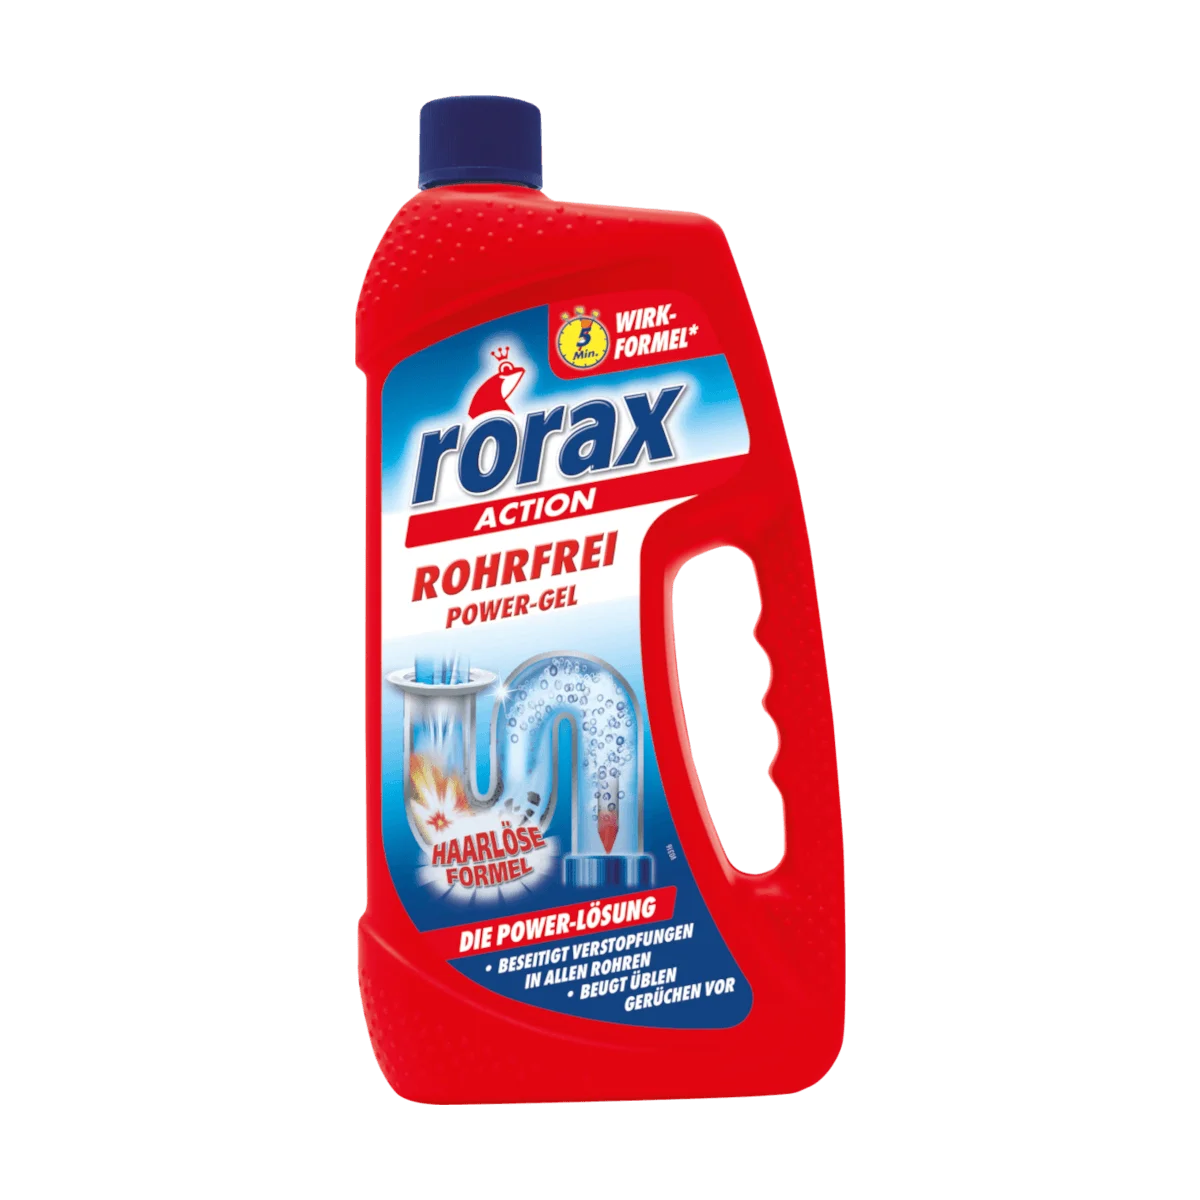 Rorax Rohrreiniger Power-Gel, 1 l